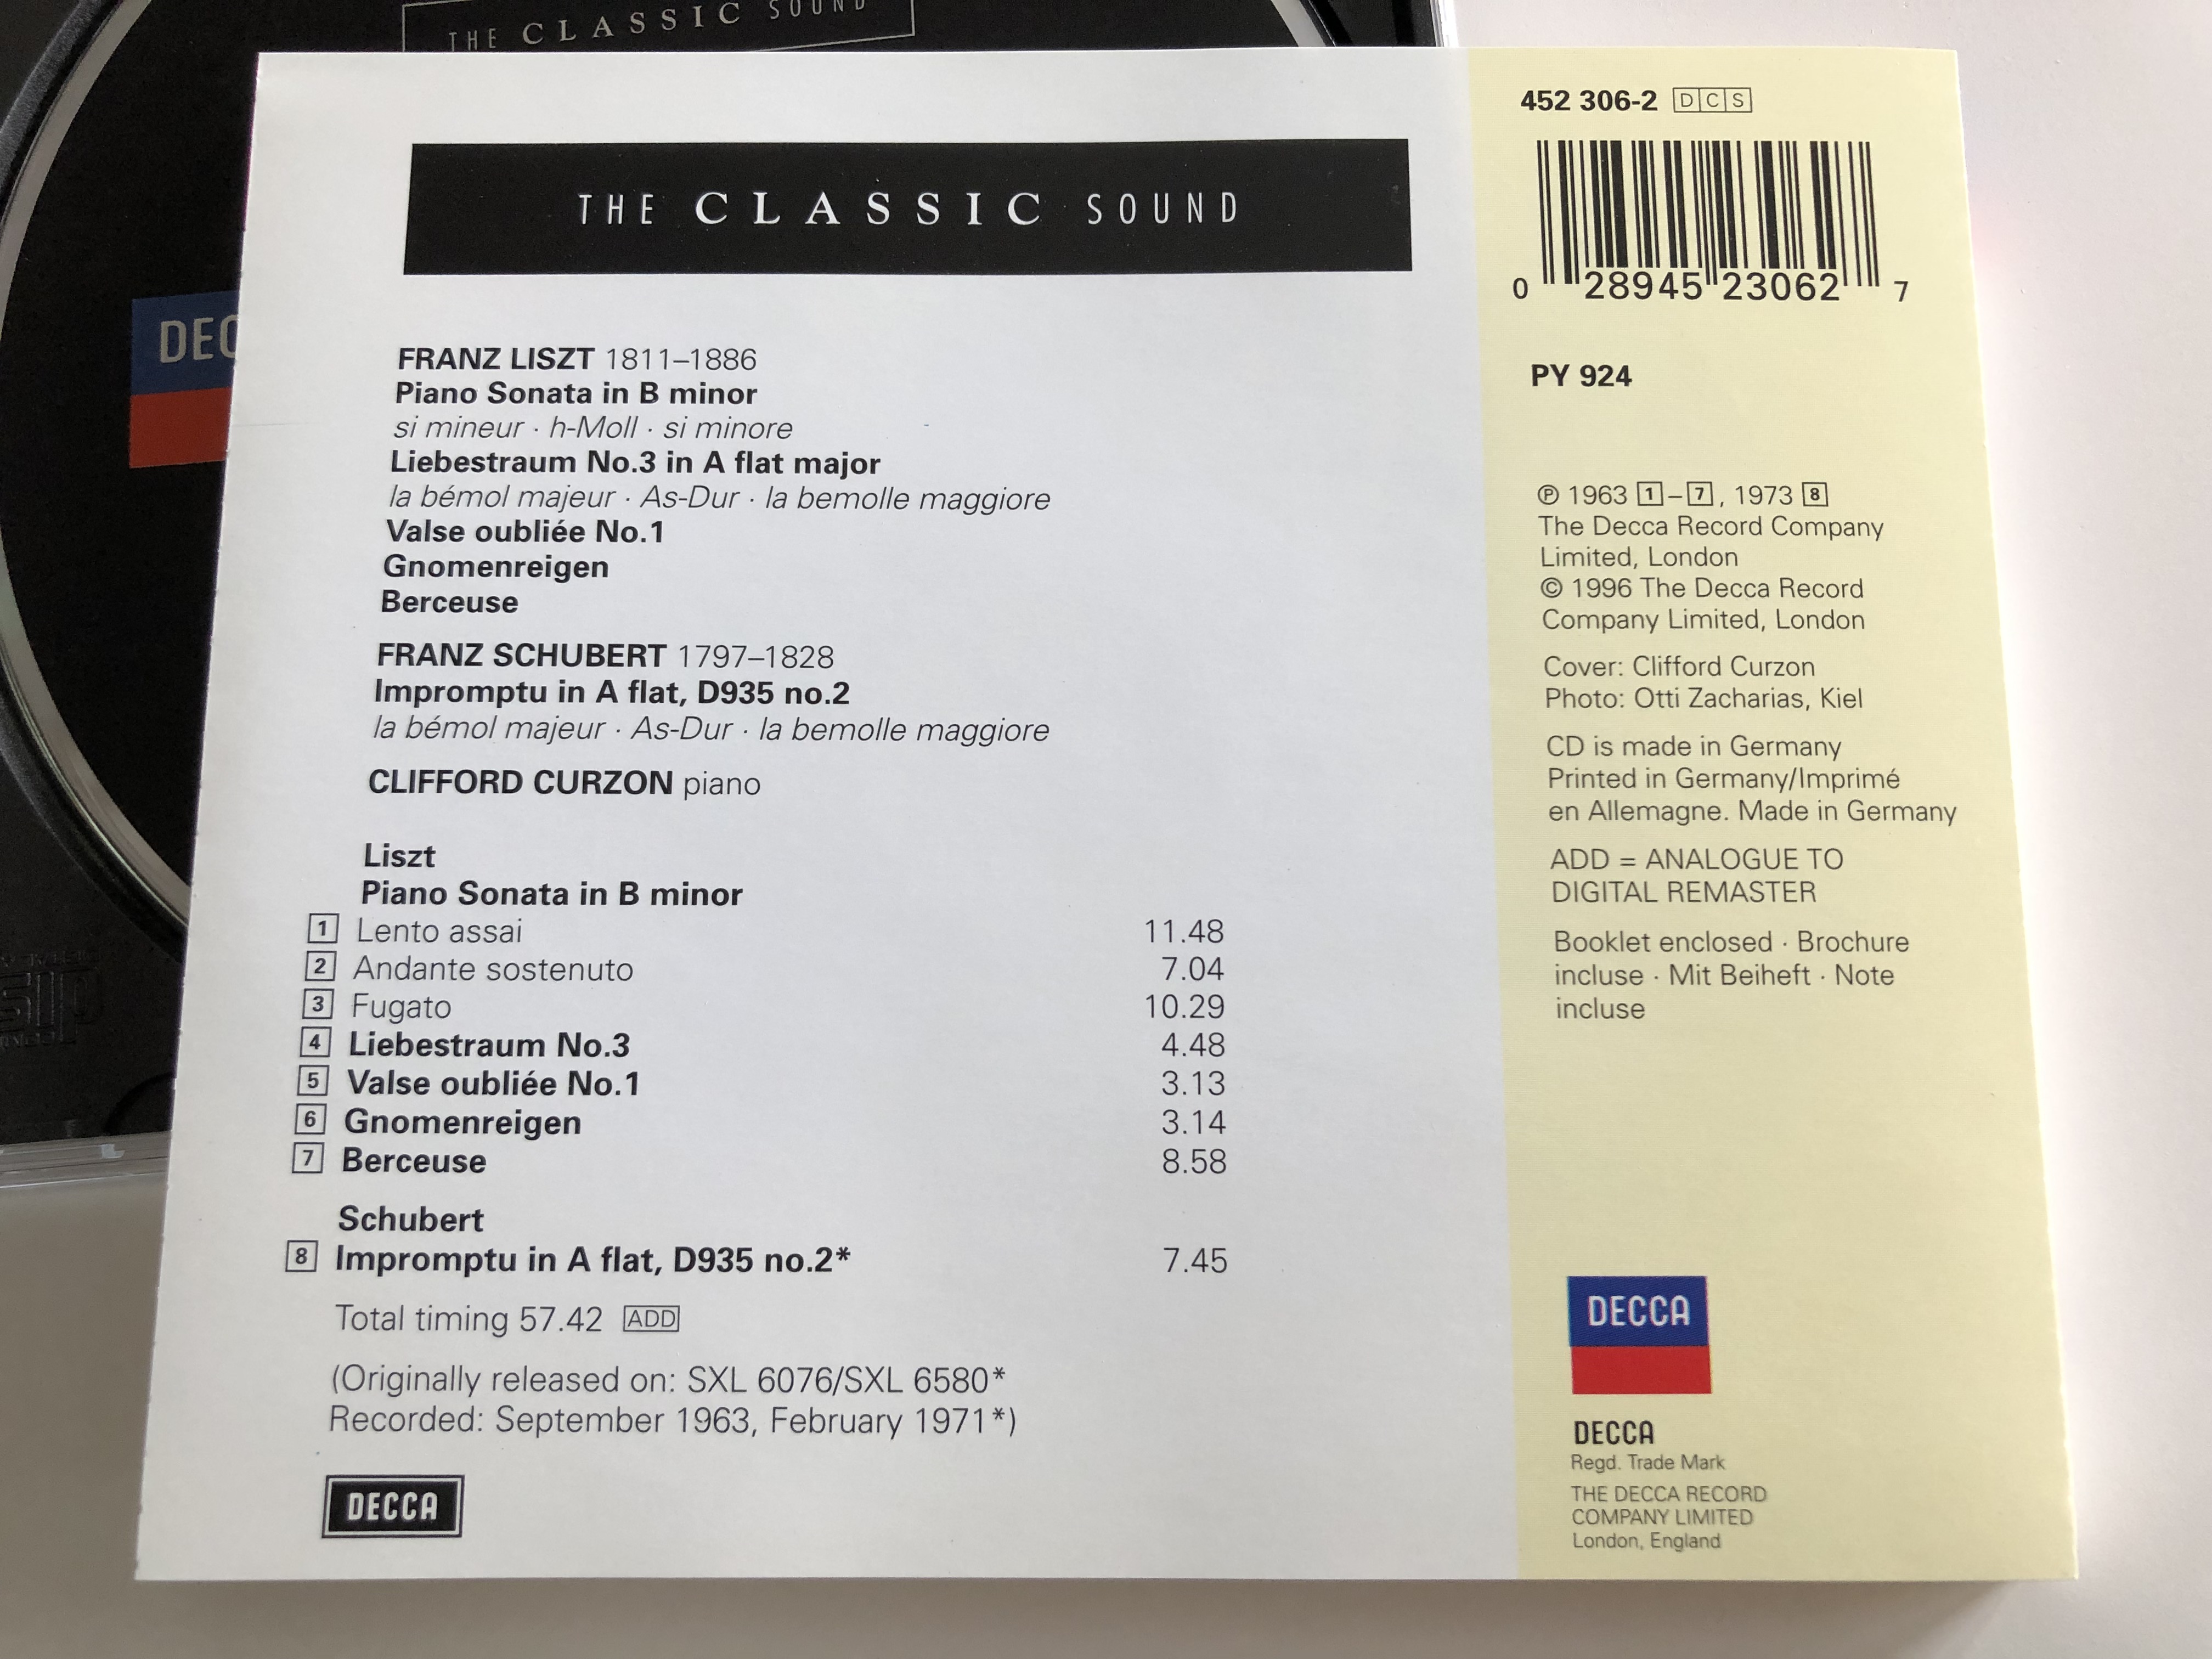 liszt-sonata-in-b-minor-liebestraum-no.3-valse-oubli-e-no.-1-gnomenreigen-berceuse-clifford-curzon-decca-audio-cd-1996-452-306-2-6-.jpg